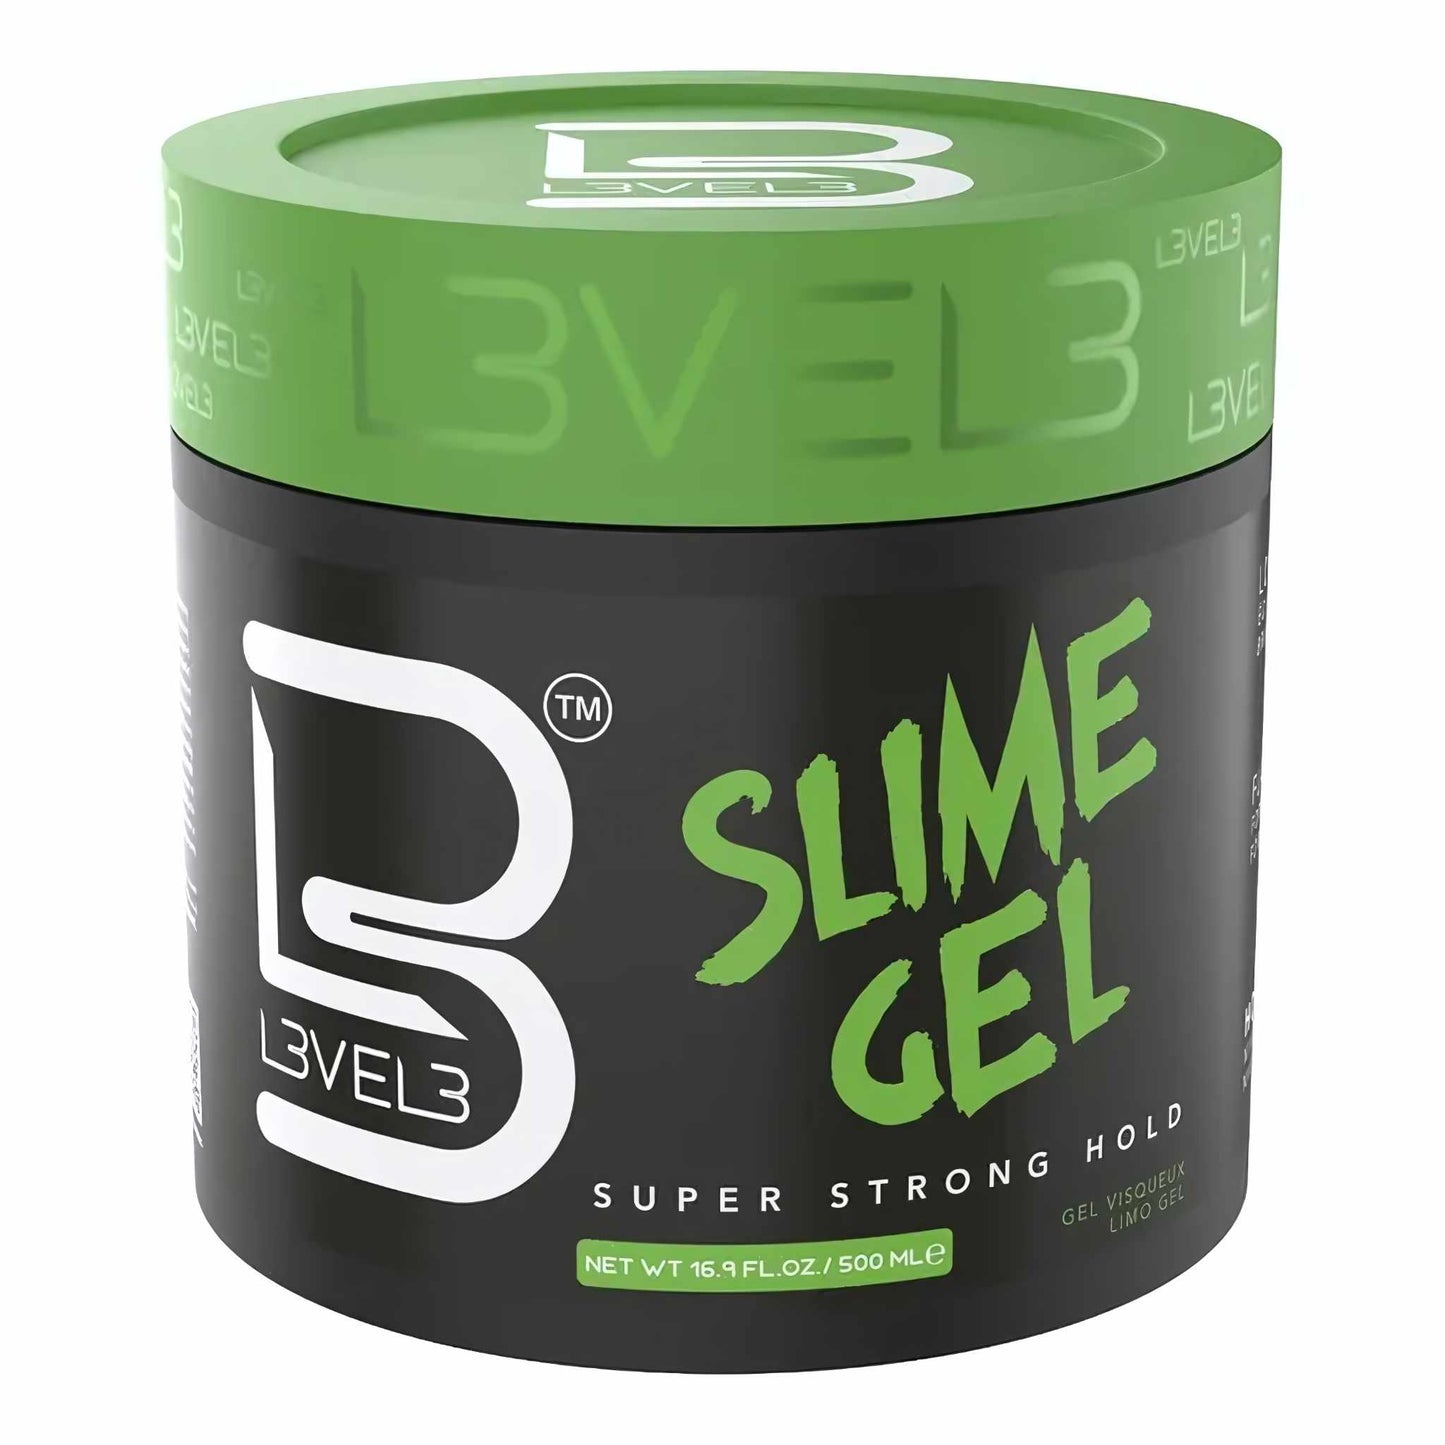 Level3 Slime Gel Super Strong Hold 500 ml